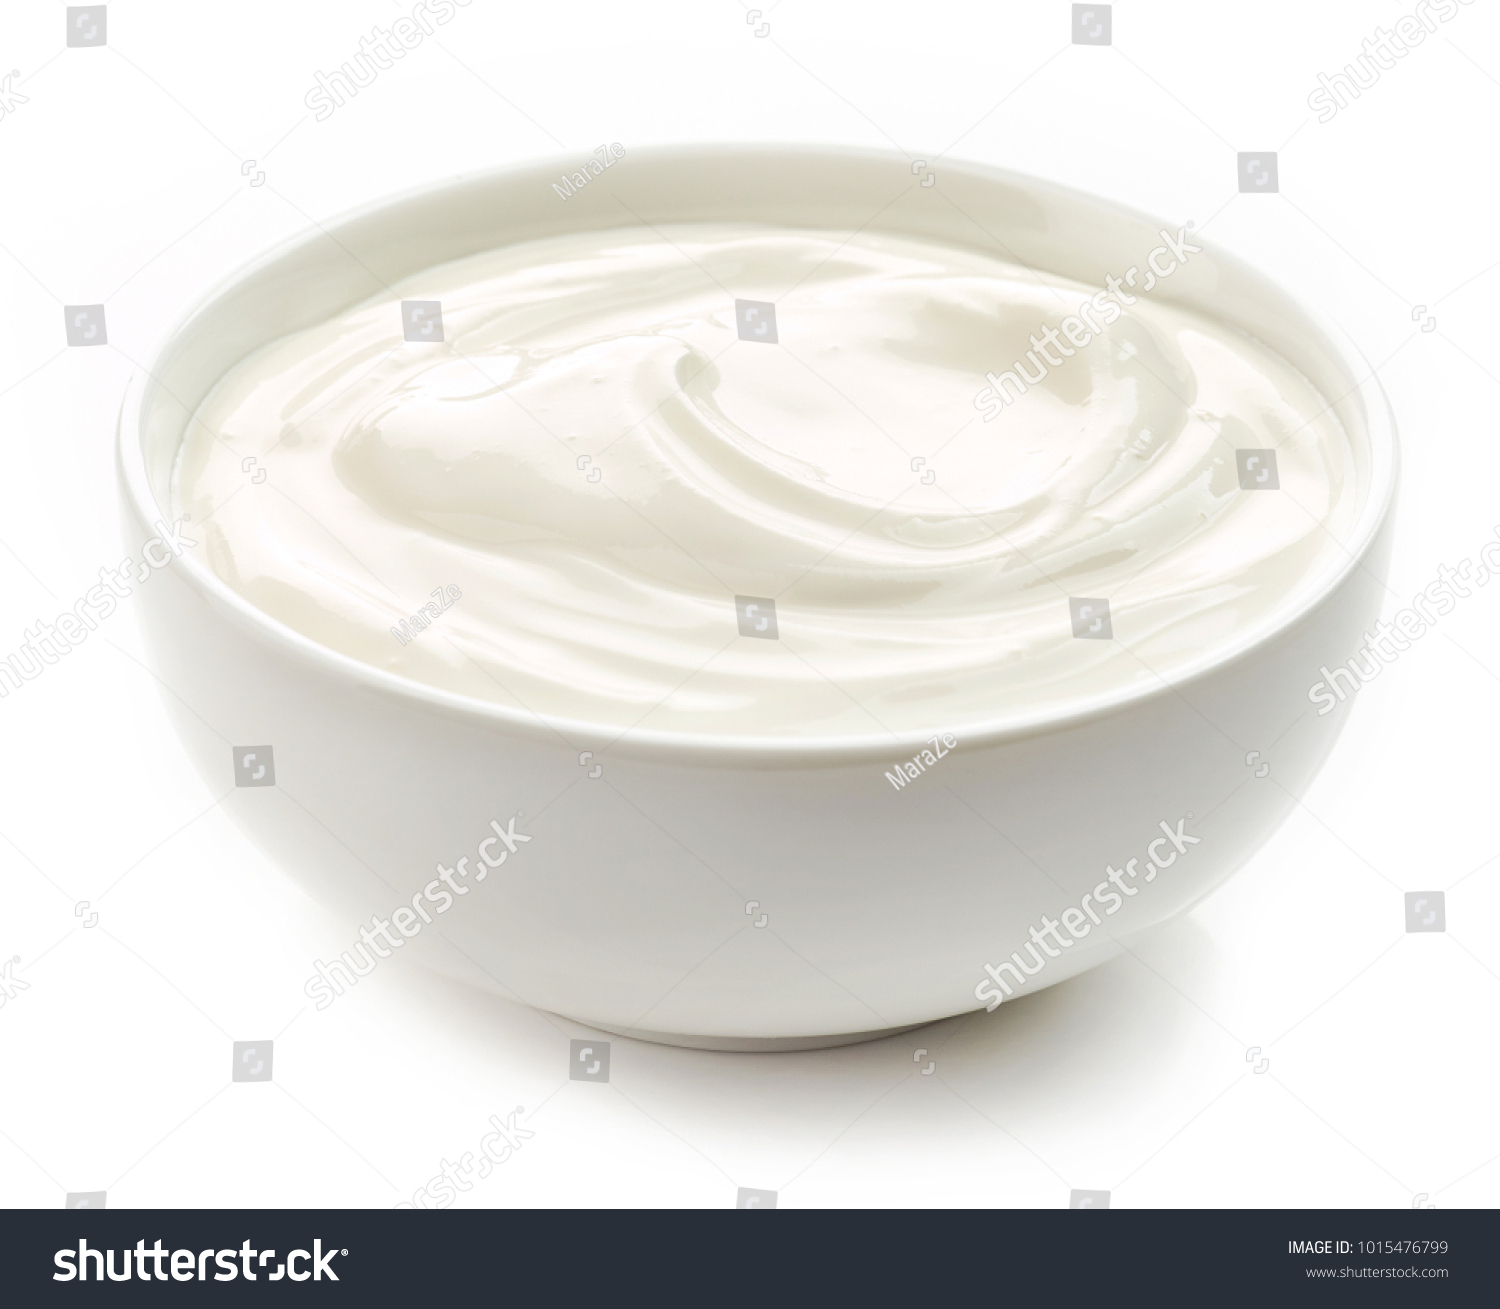 bowl of sour cream yogurt isolated on white background #1015476799